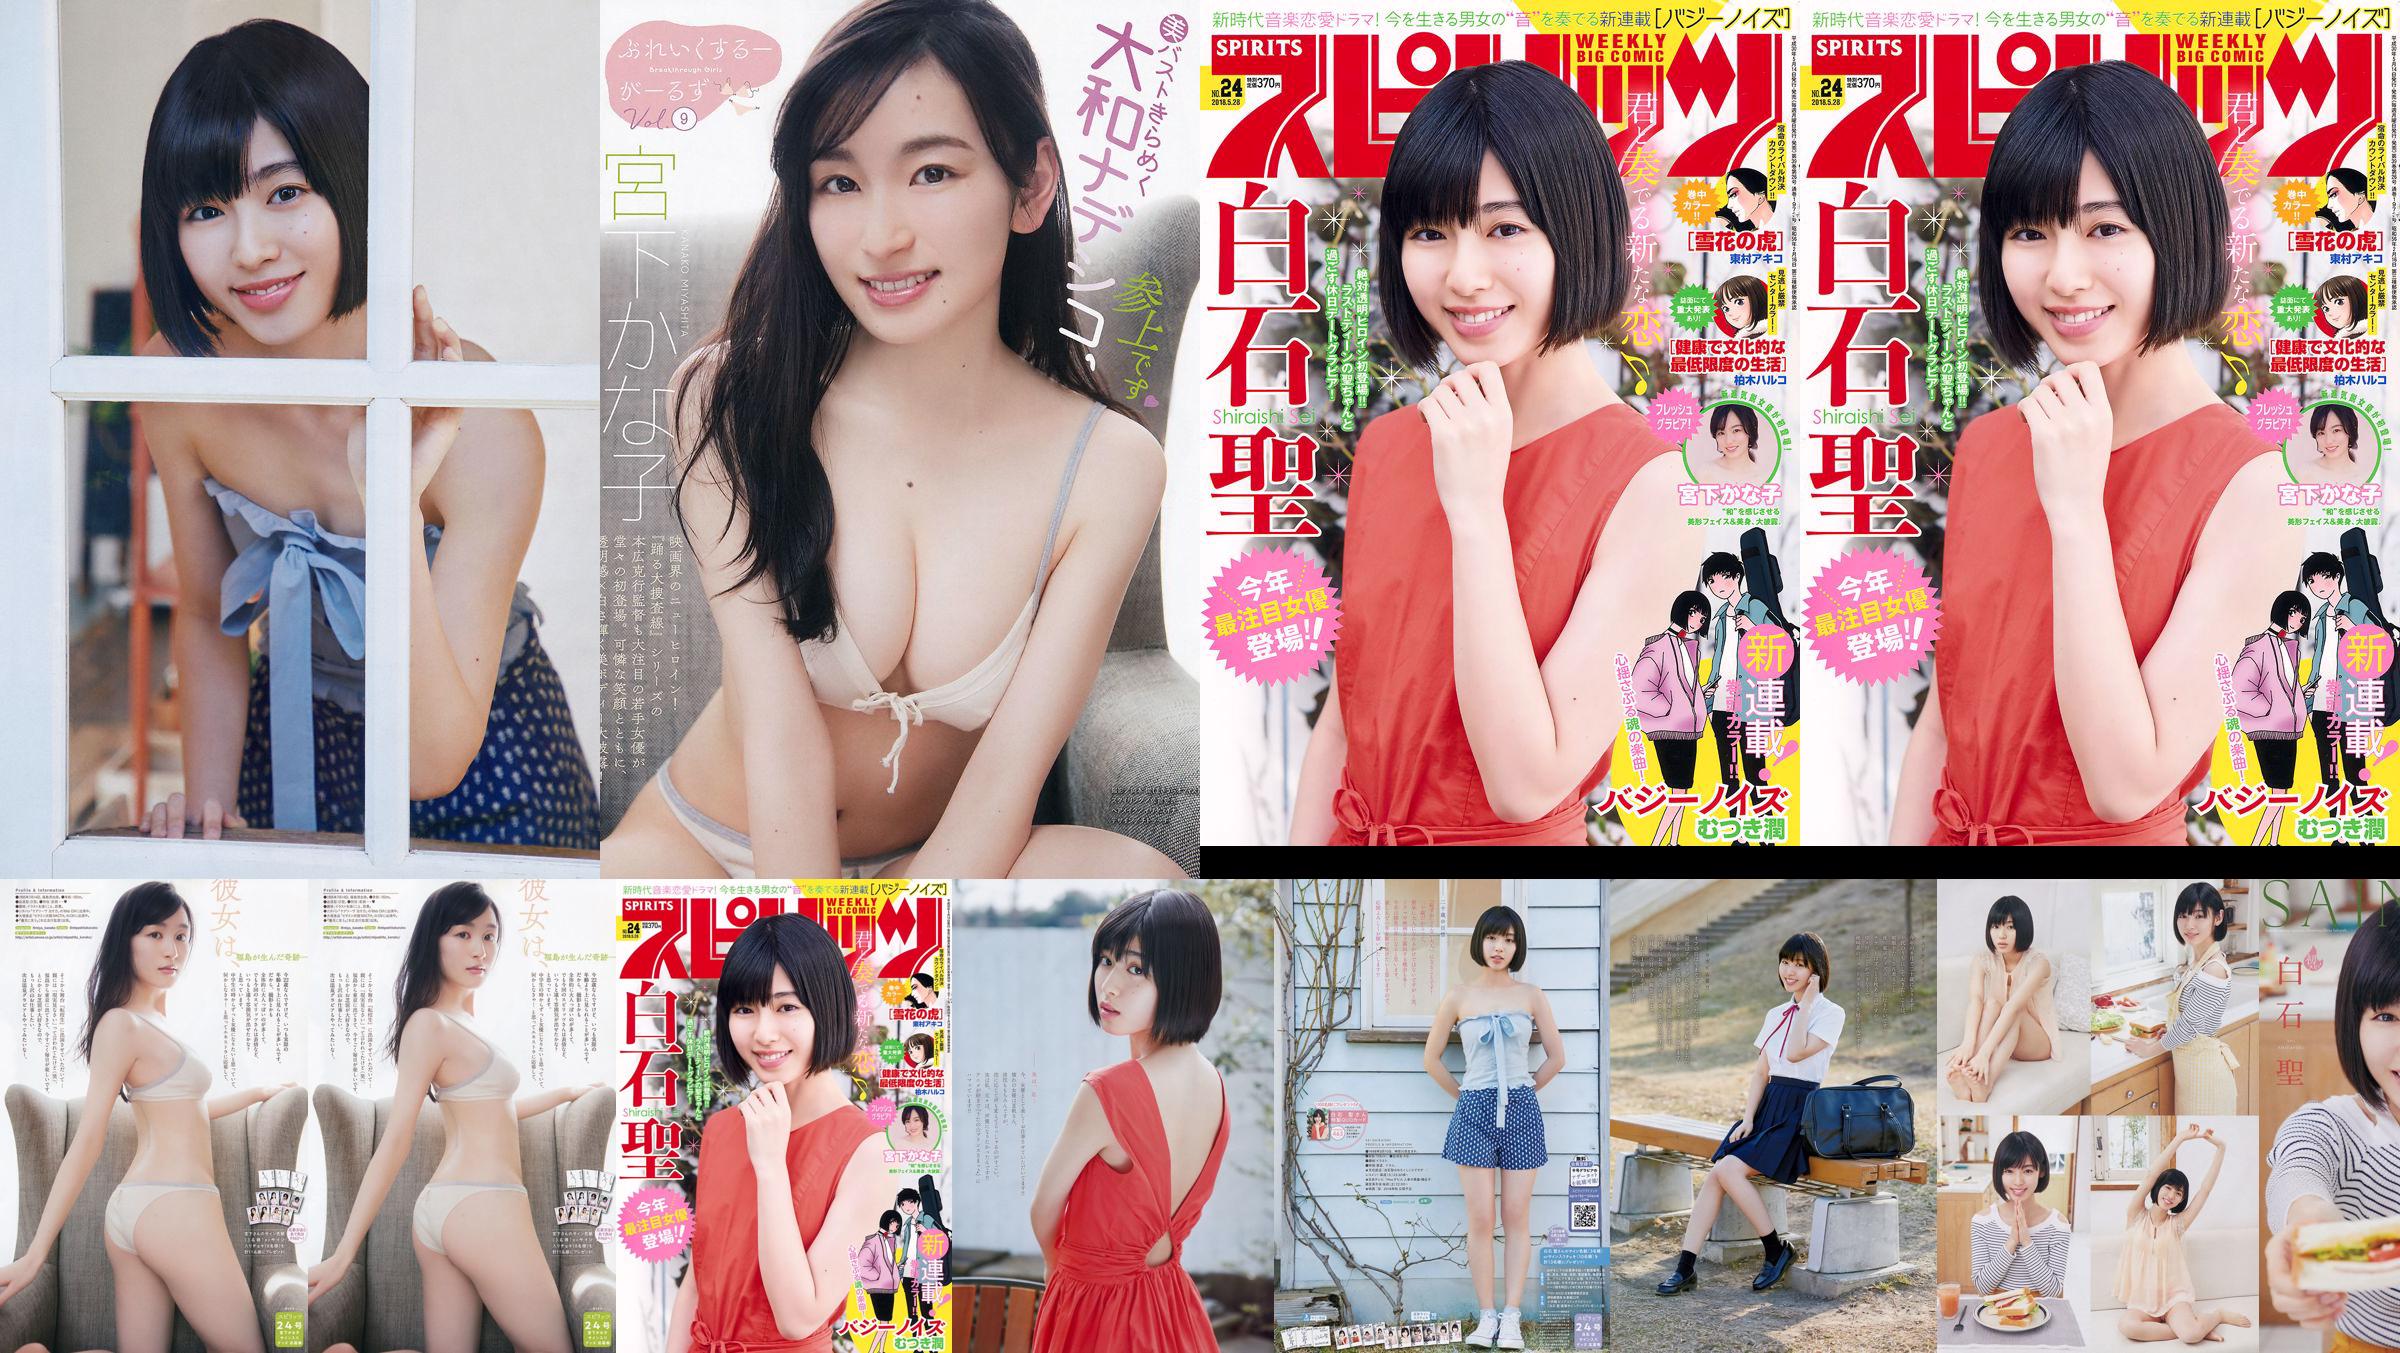 Yuria Kizaki Nana Okada AKB48 Under Girls [Saut hebdomadaire des jeunes] 2015 No.36-37 Photographie No.8d036c Page 3